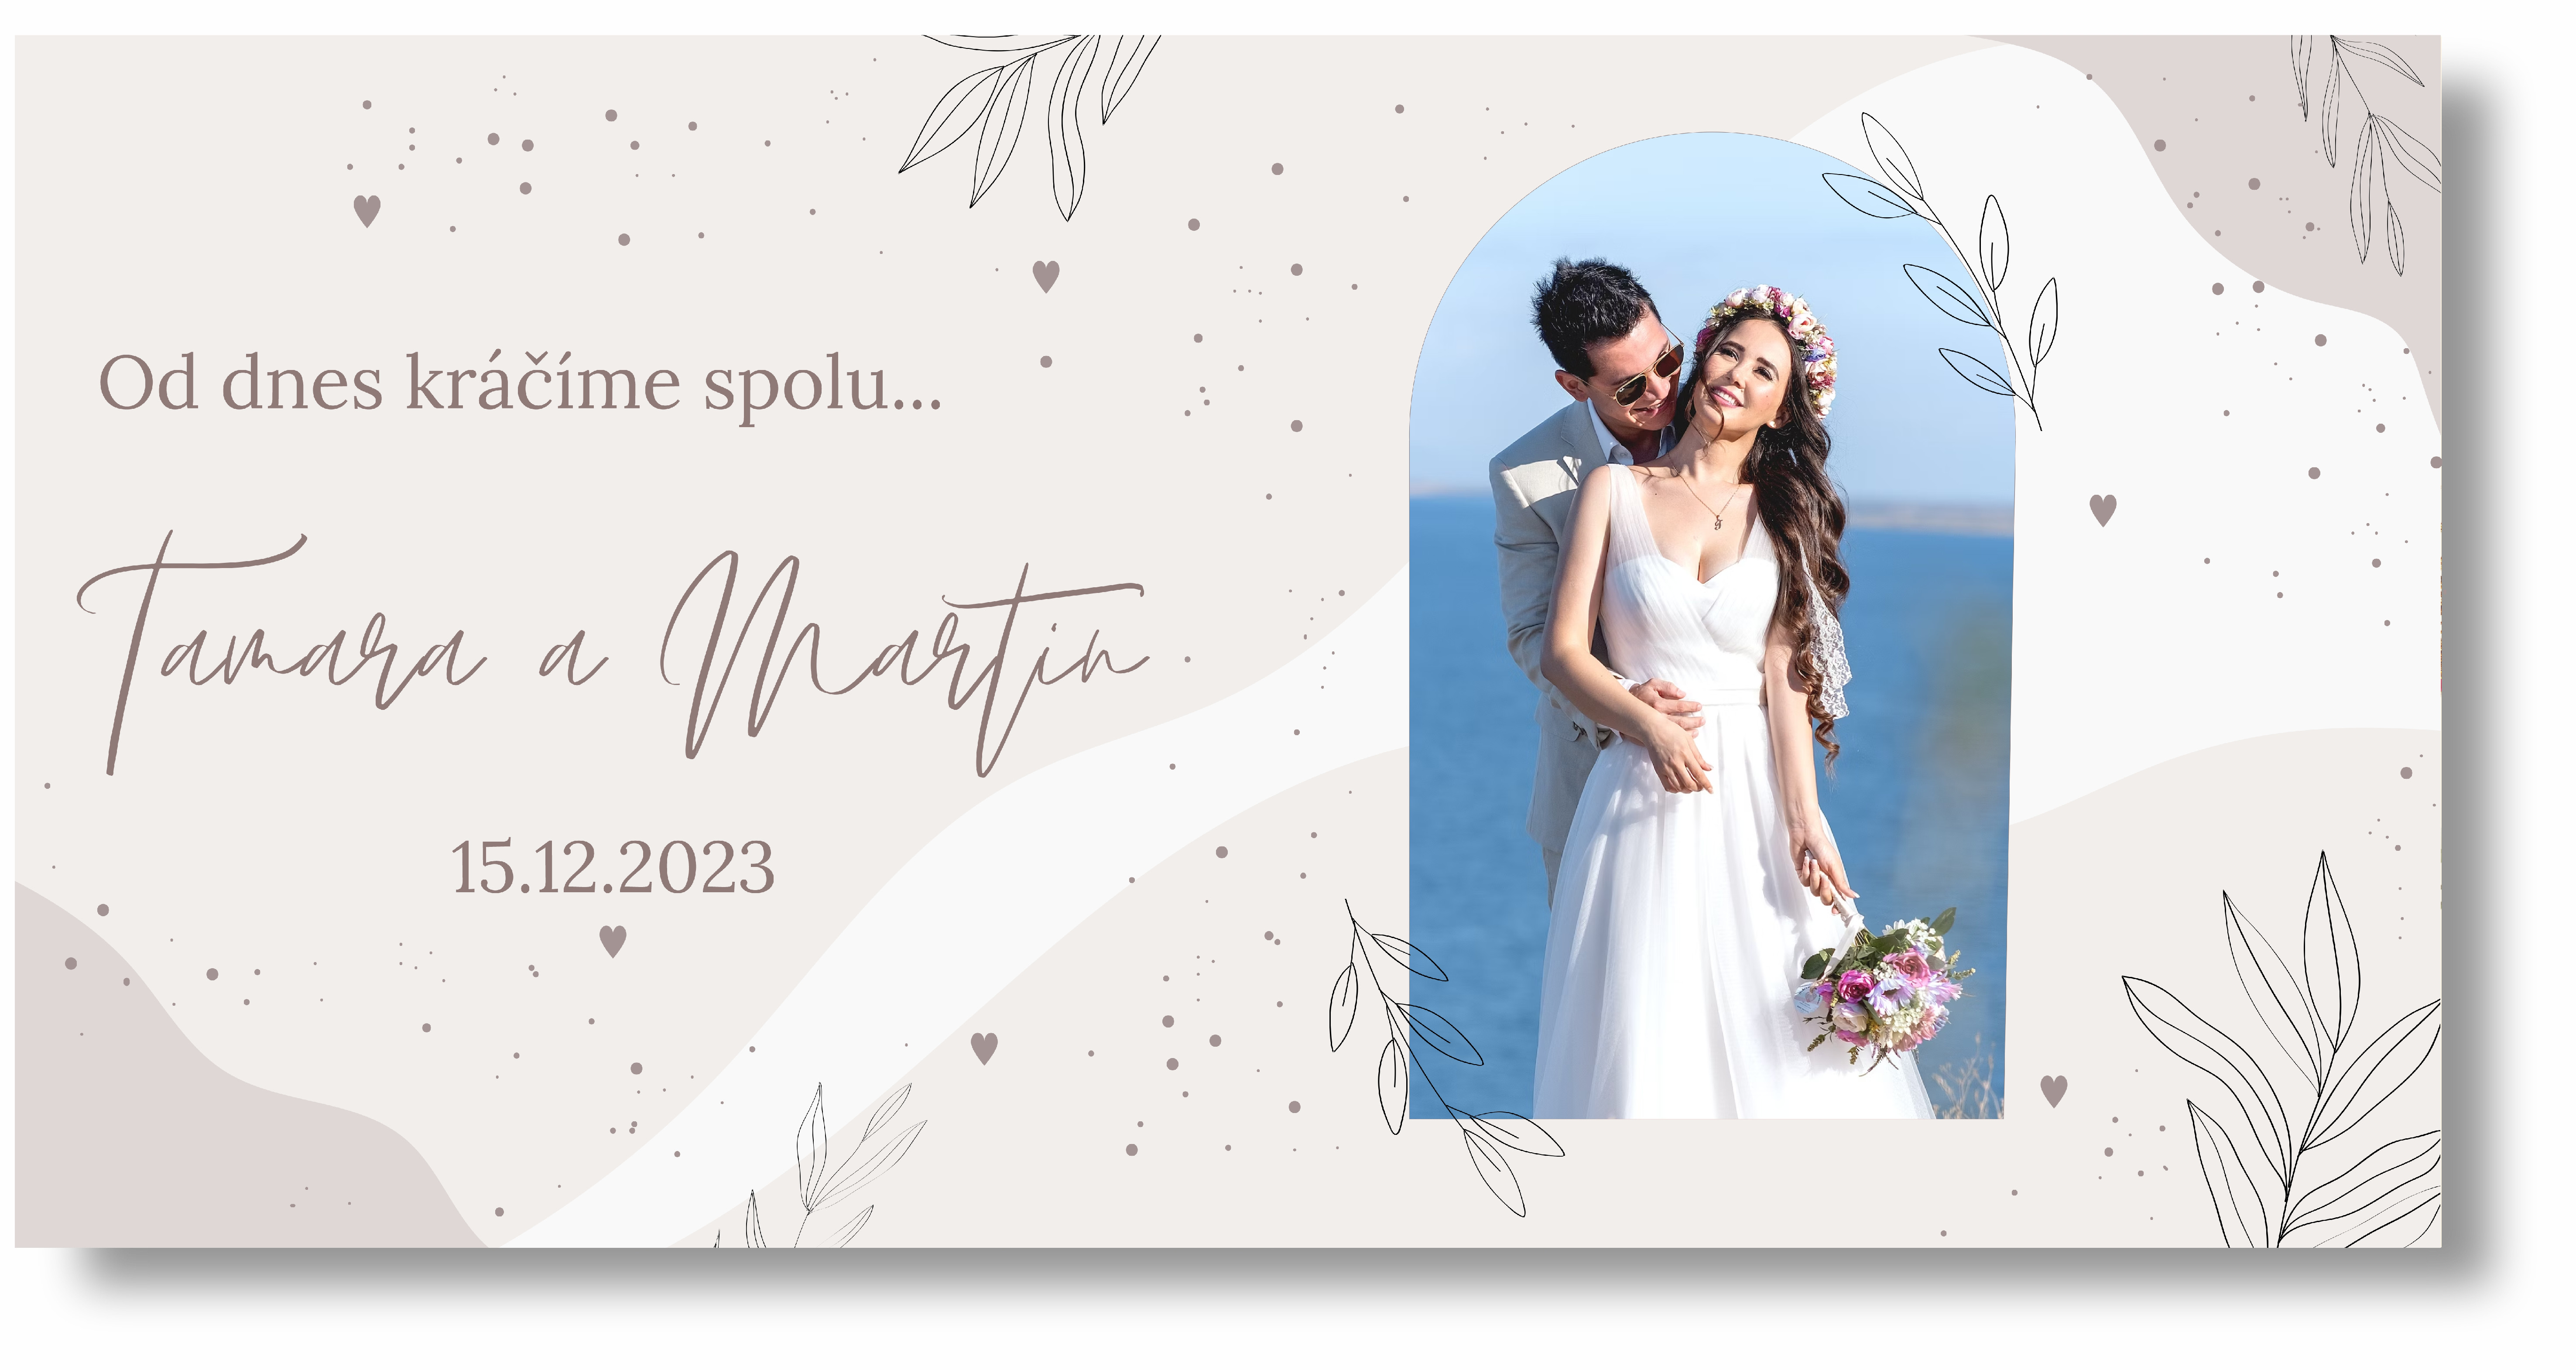 Personal Svatební banner s fotkou - Gray Rozměr banner: 130 x 260 cm